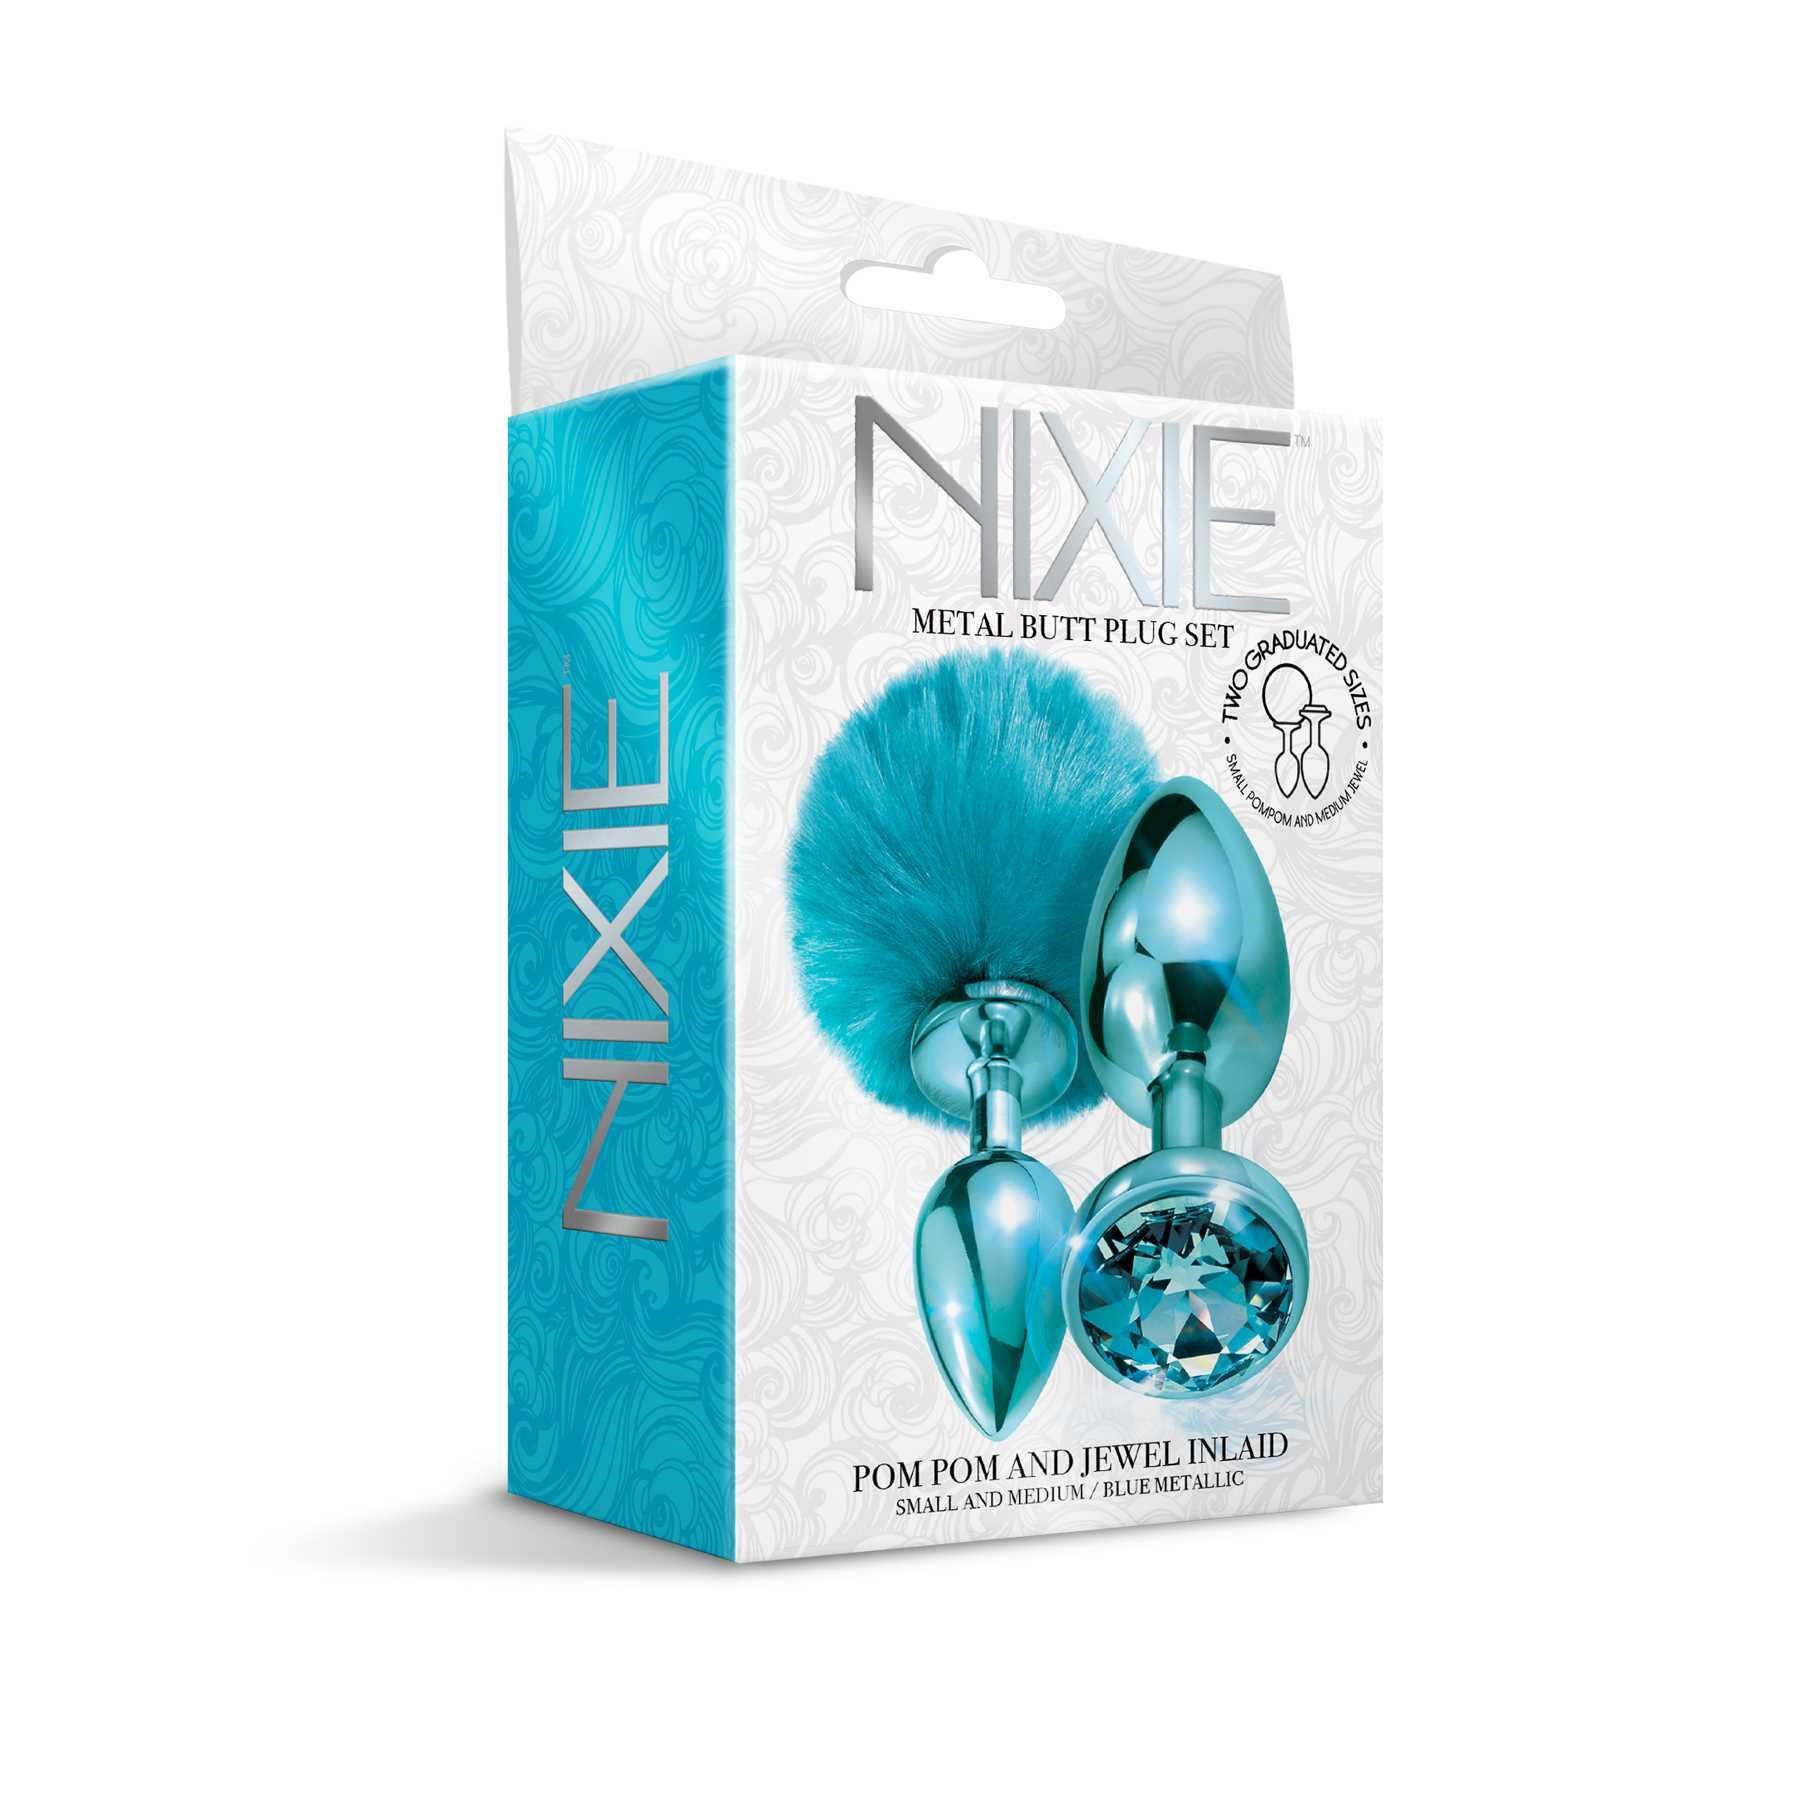 NIXIE Metal Butt Plug Set Pom Pom and Jewel Inlaid Metallic blue box